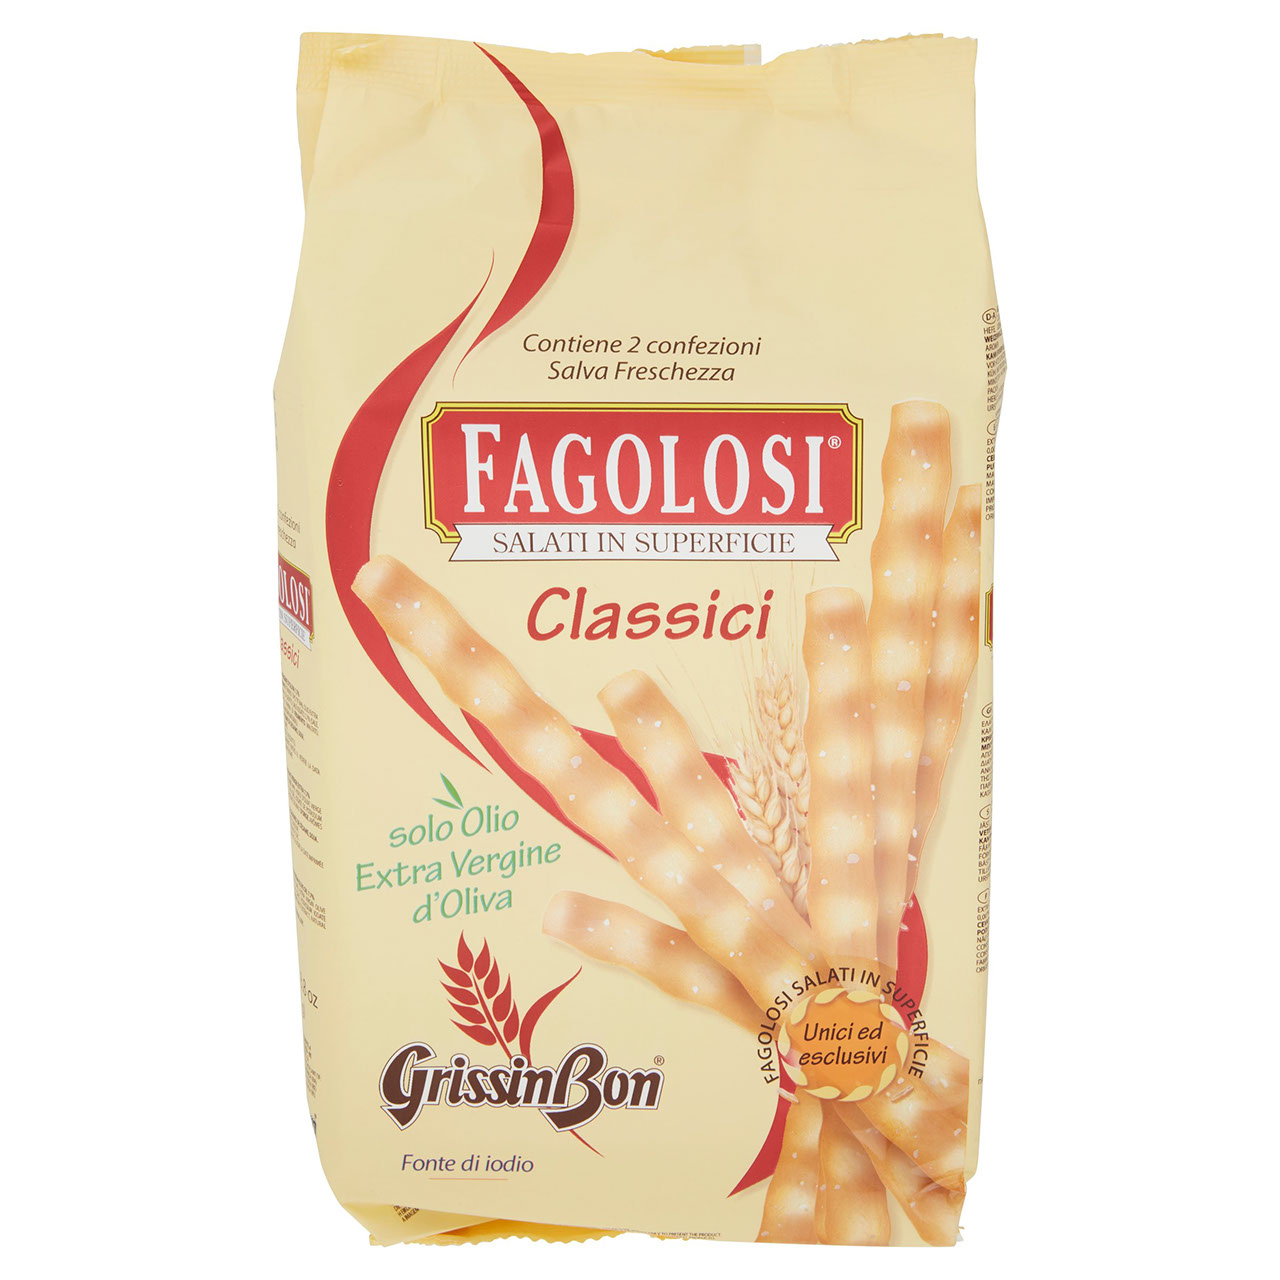 GrissinBon Fagolosi Classici in vendita online